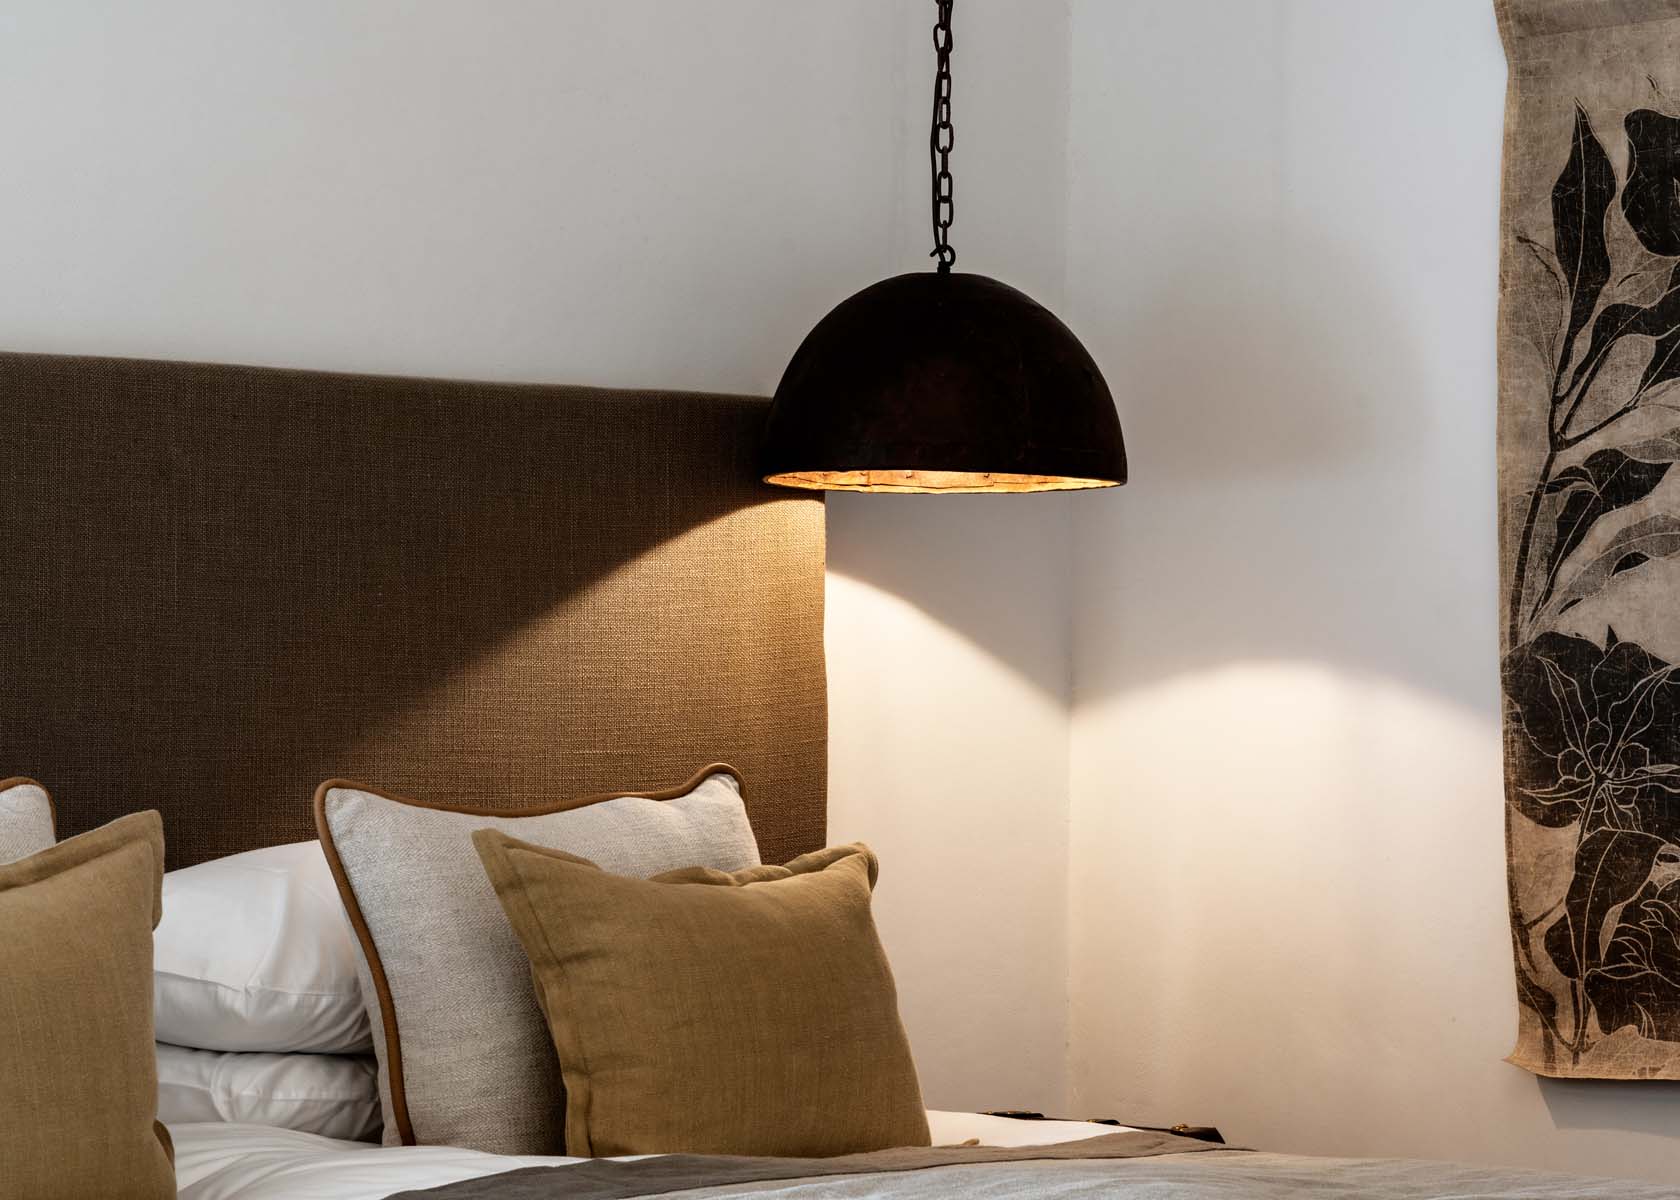 Stylish metal hanging bedside lamp